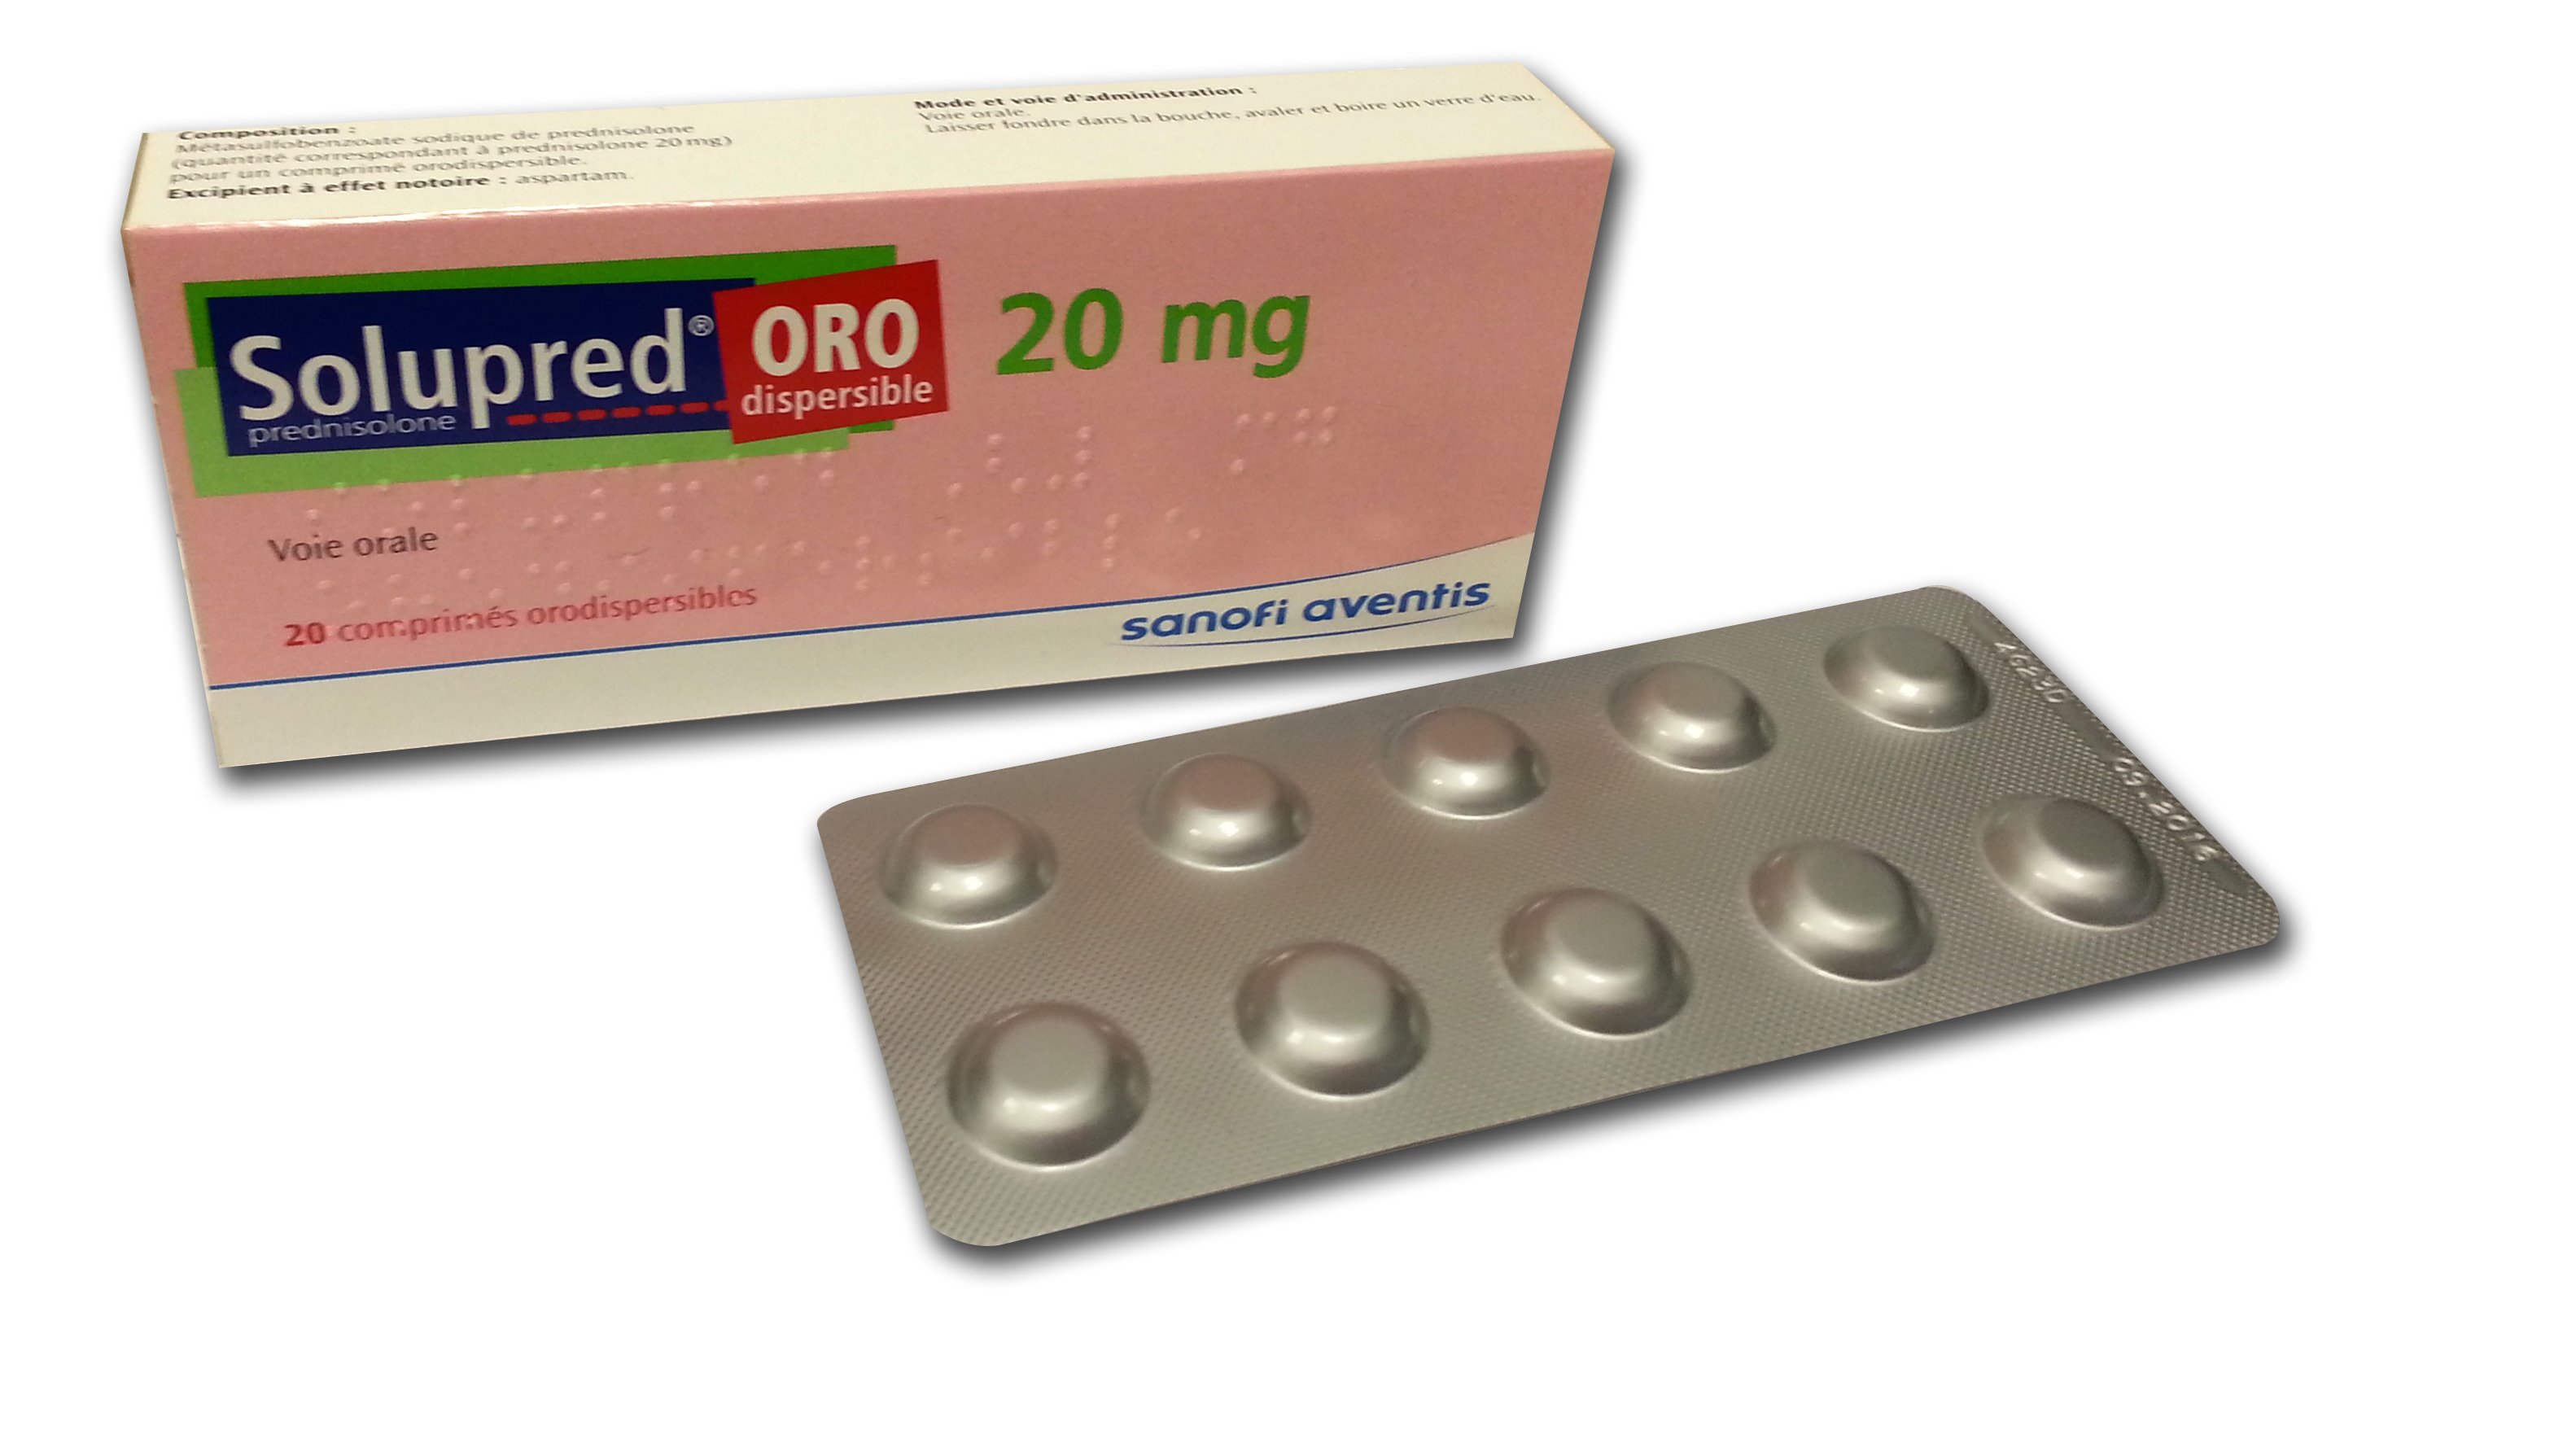 Visuel de l'emballage du médicament SOLUPRED 20 mg, Comprimé orodispersible.